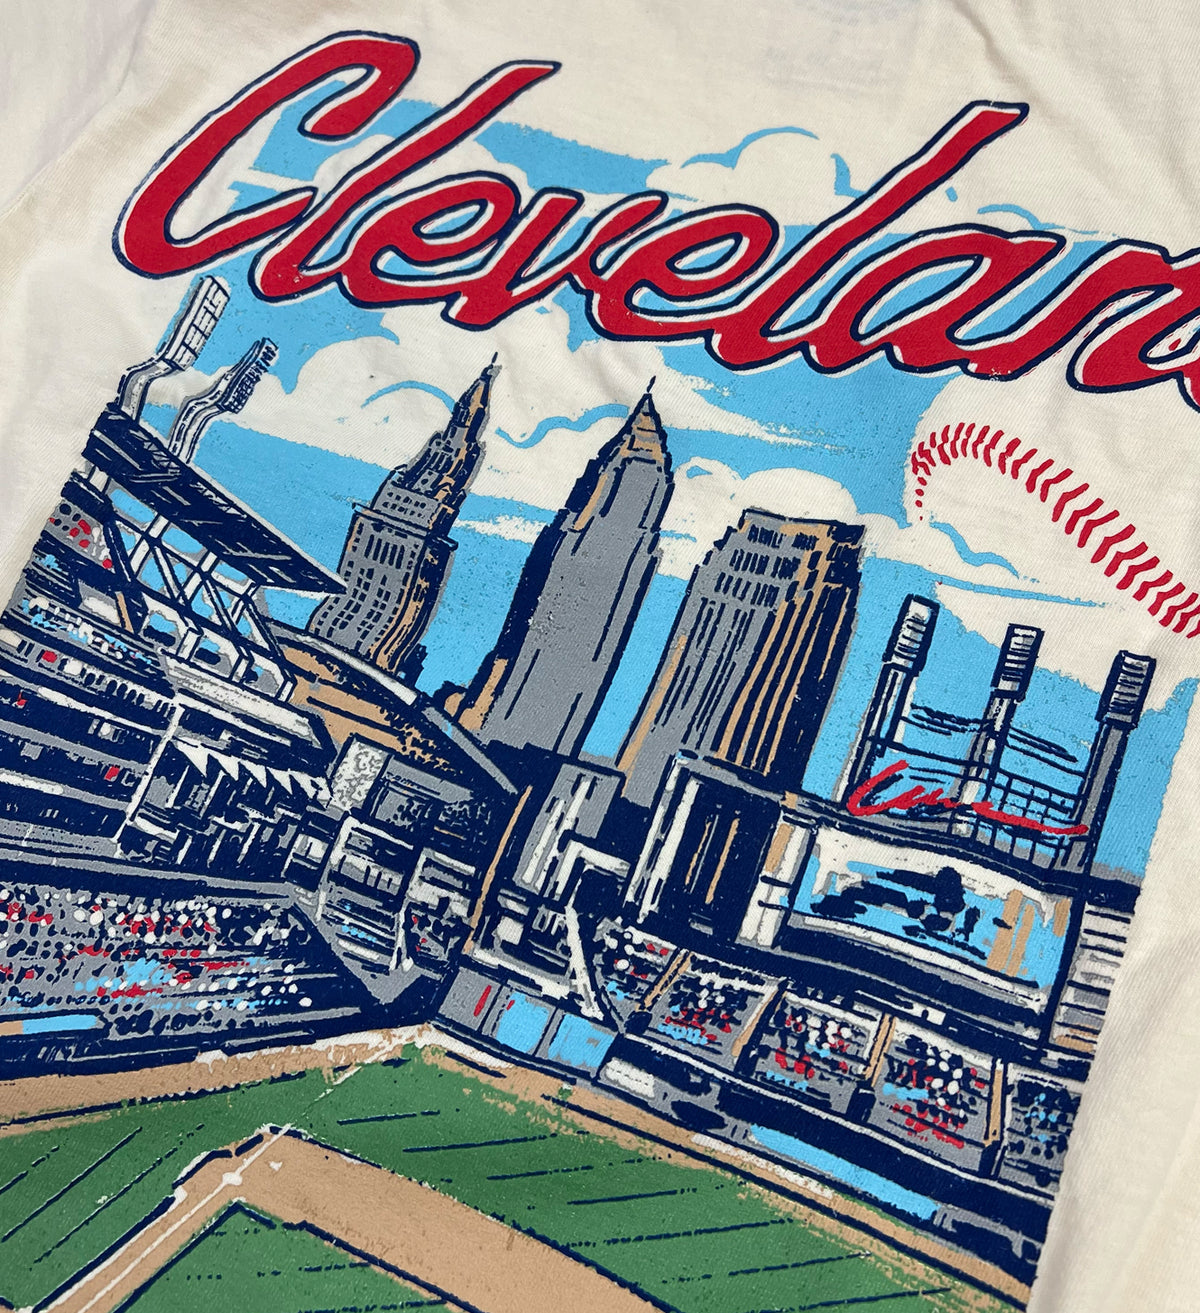 Cleveland Baseball Summer Tshirt